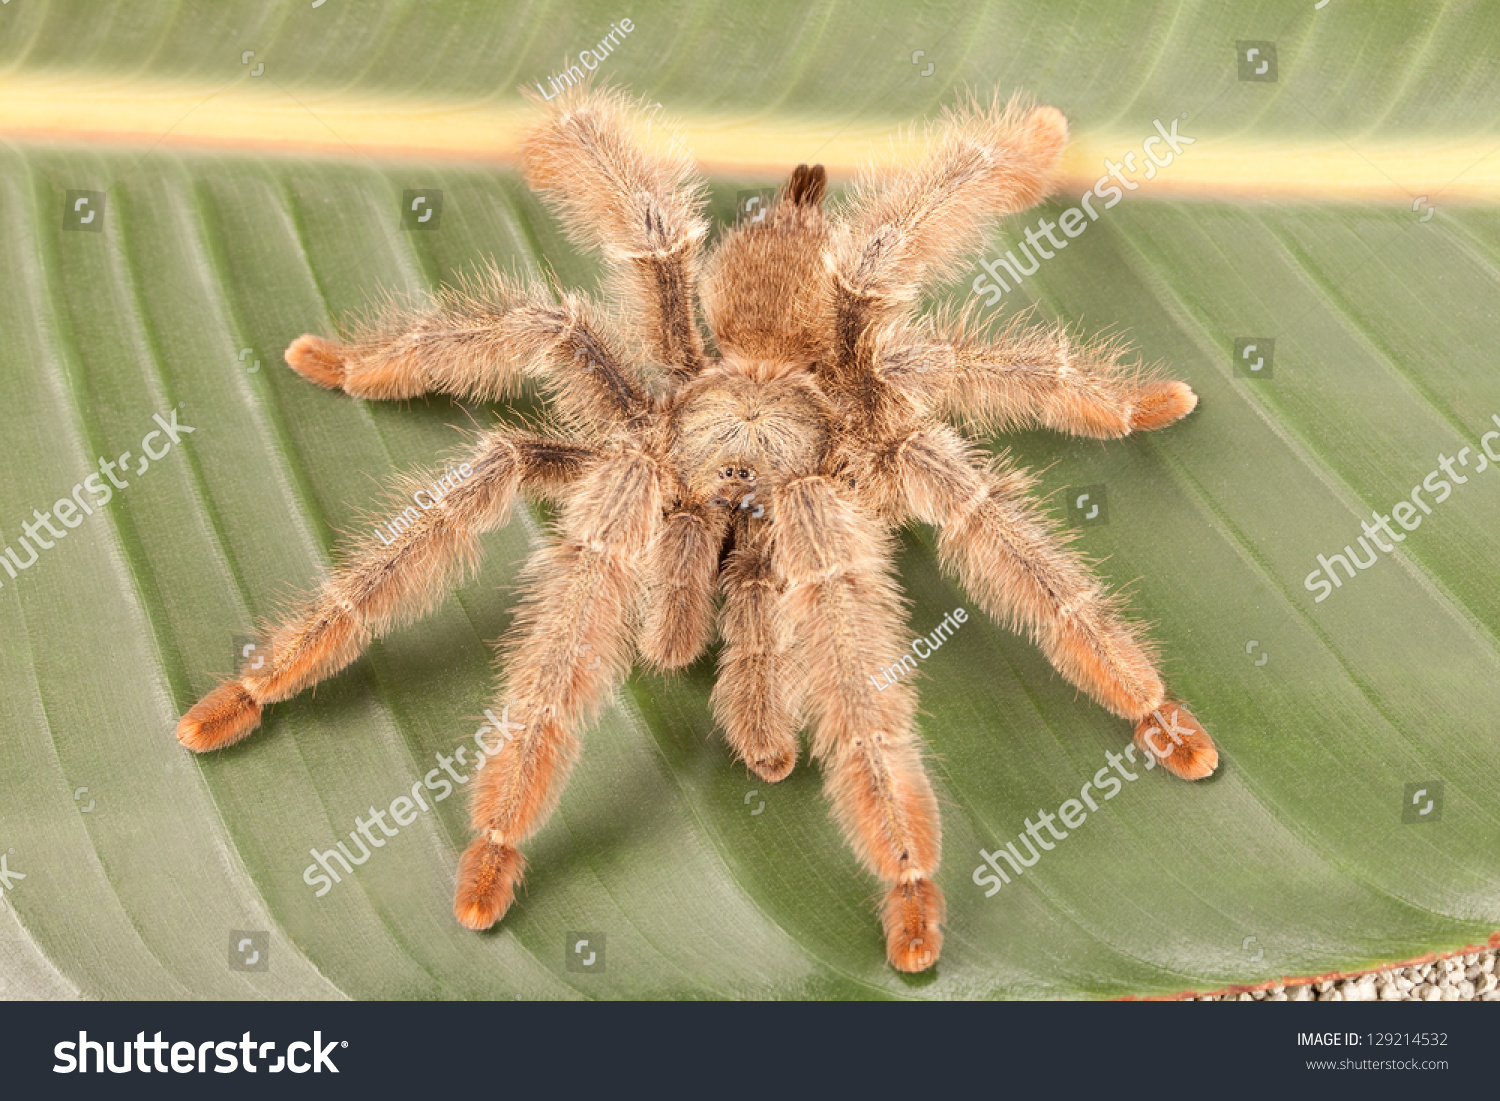 stock-photo-panama-blonde-tarantula-psalmopoeus-pulcher-on-green-leaf-129214532.jpg